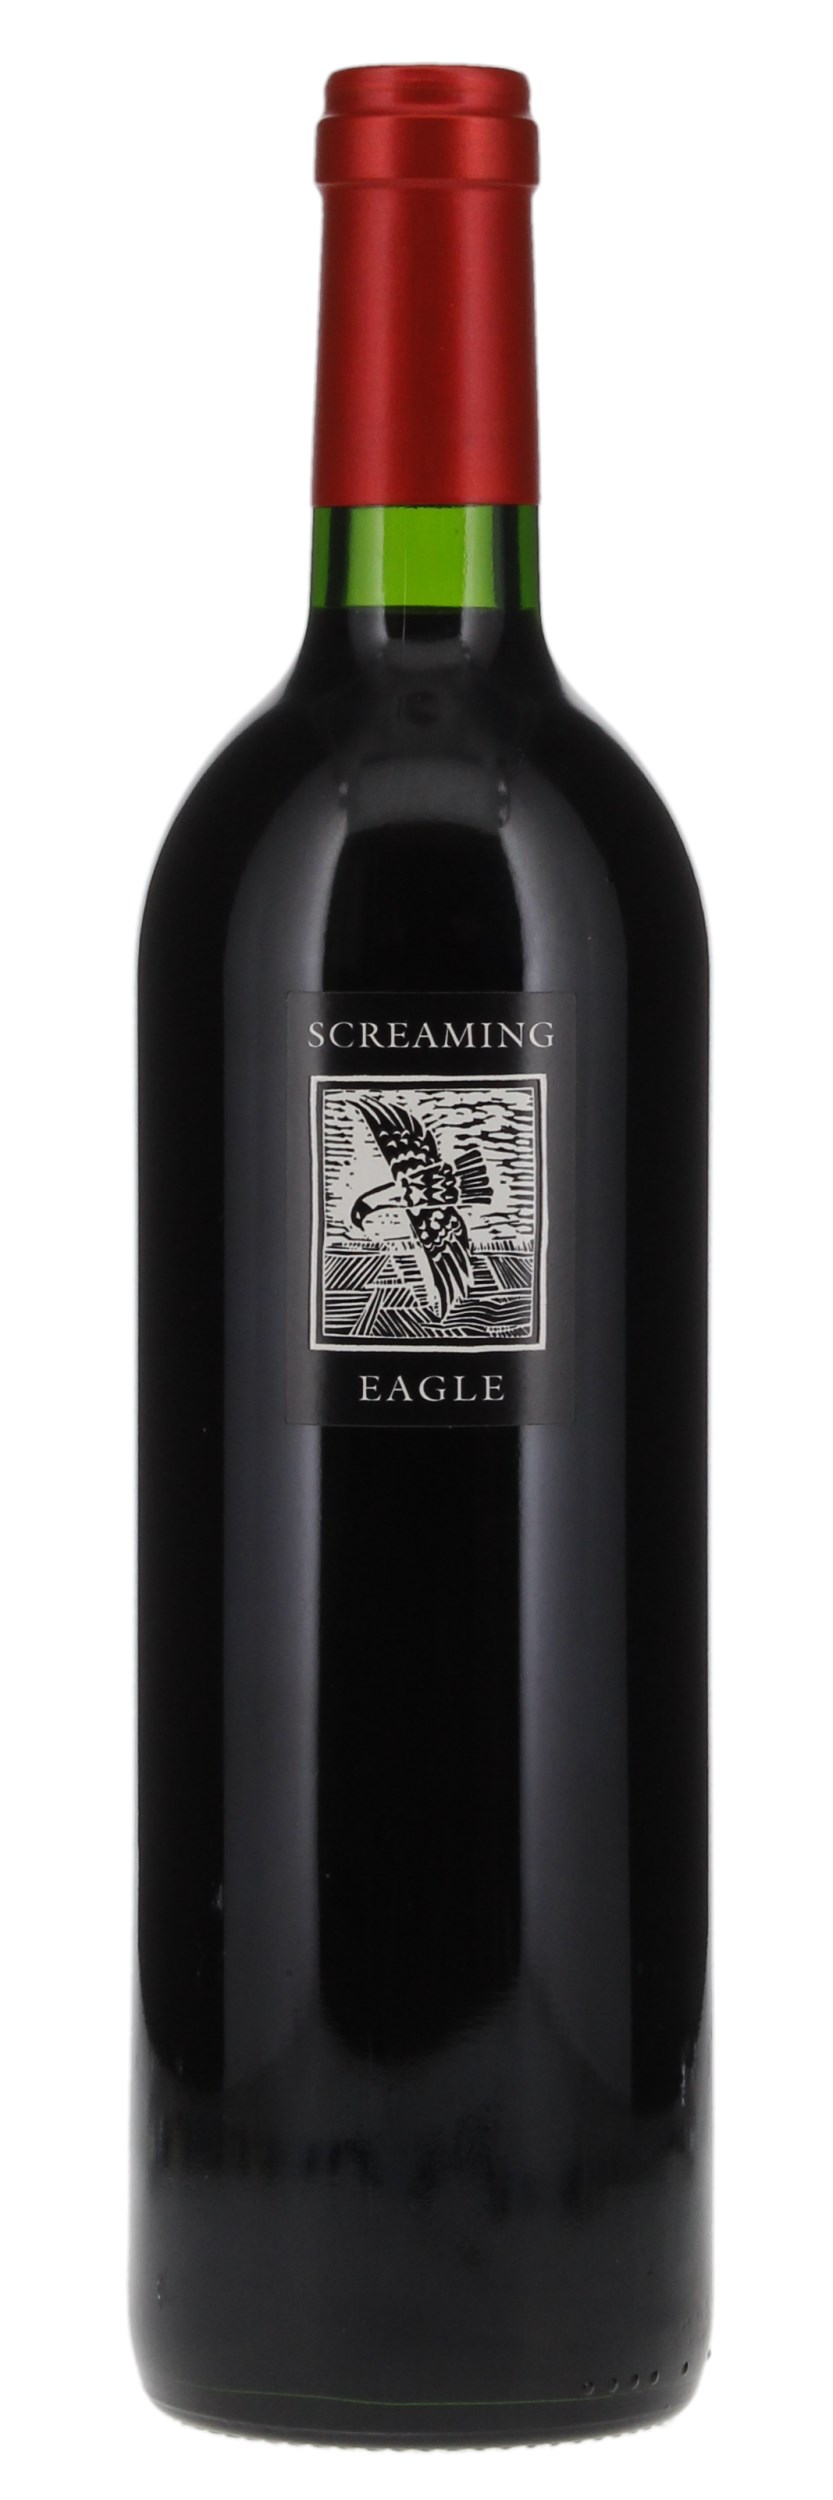 1997 Screaming Eagle Cabernet Sauvignon, 750ml